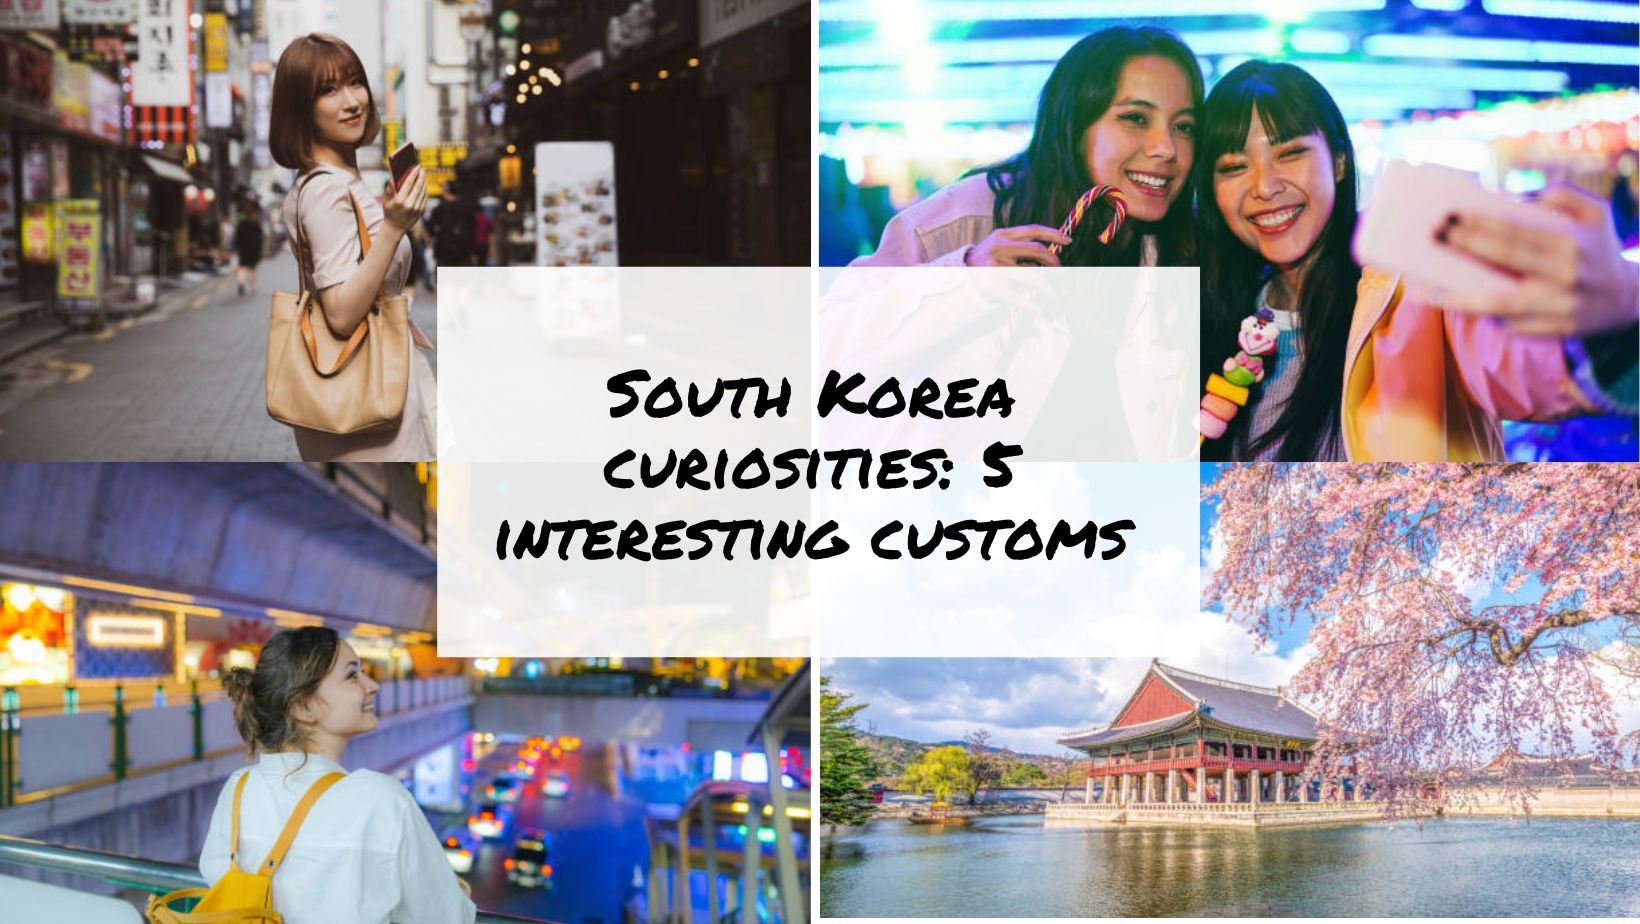 South Korea curiosities 5 interesting customs